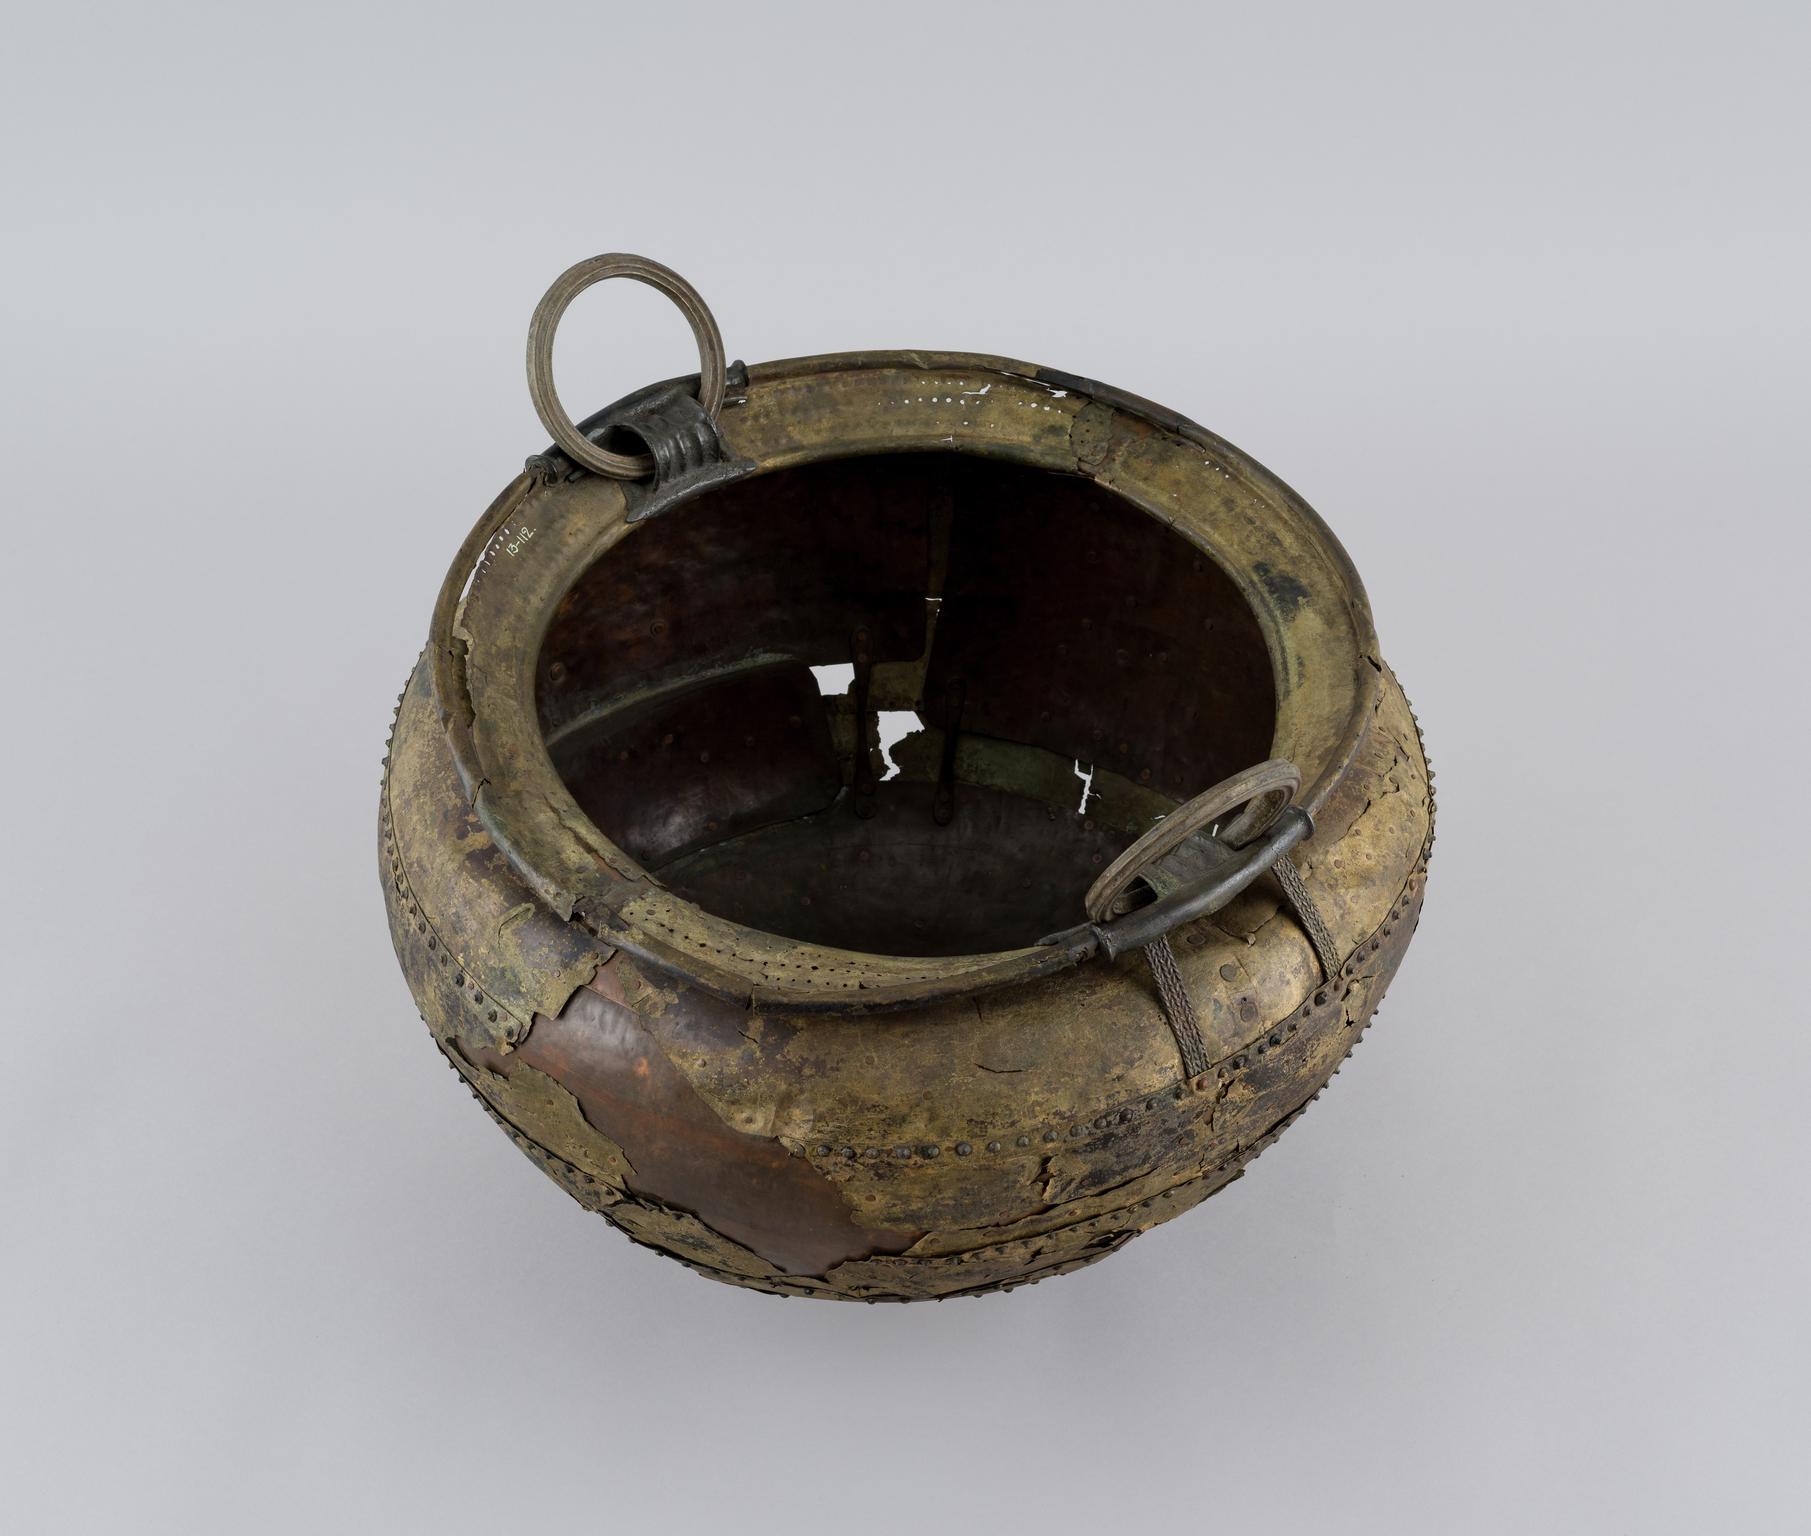 Early Iron Age bronze cauldron